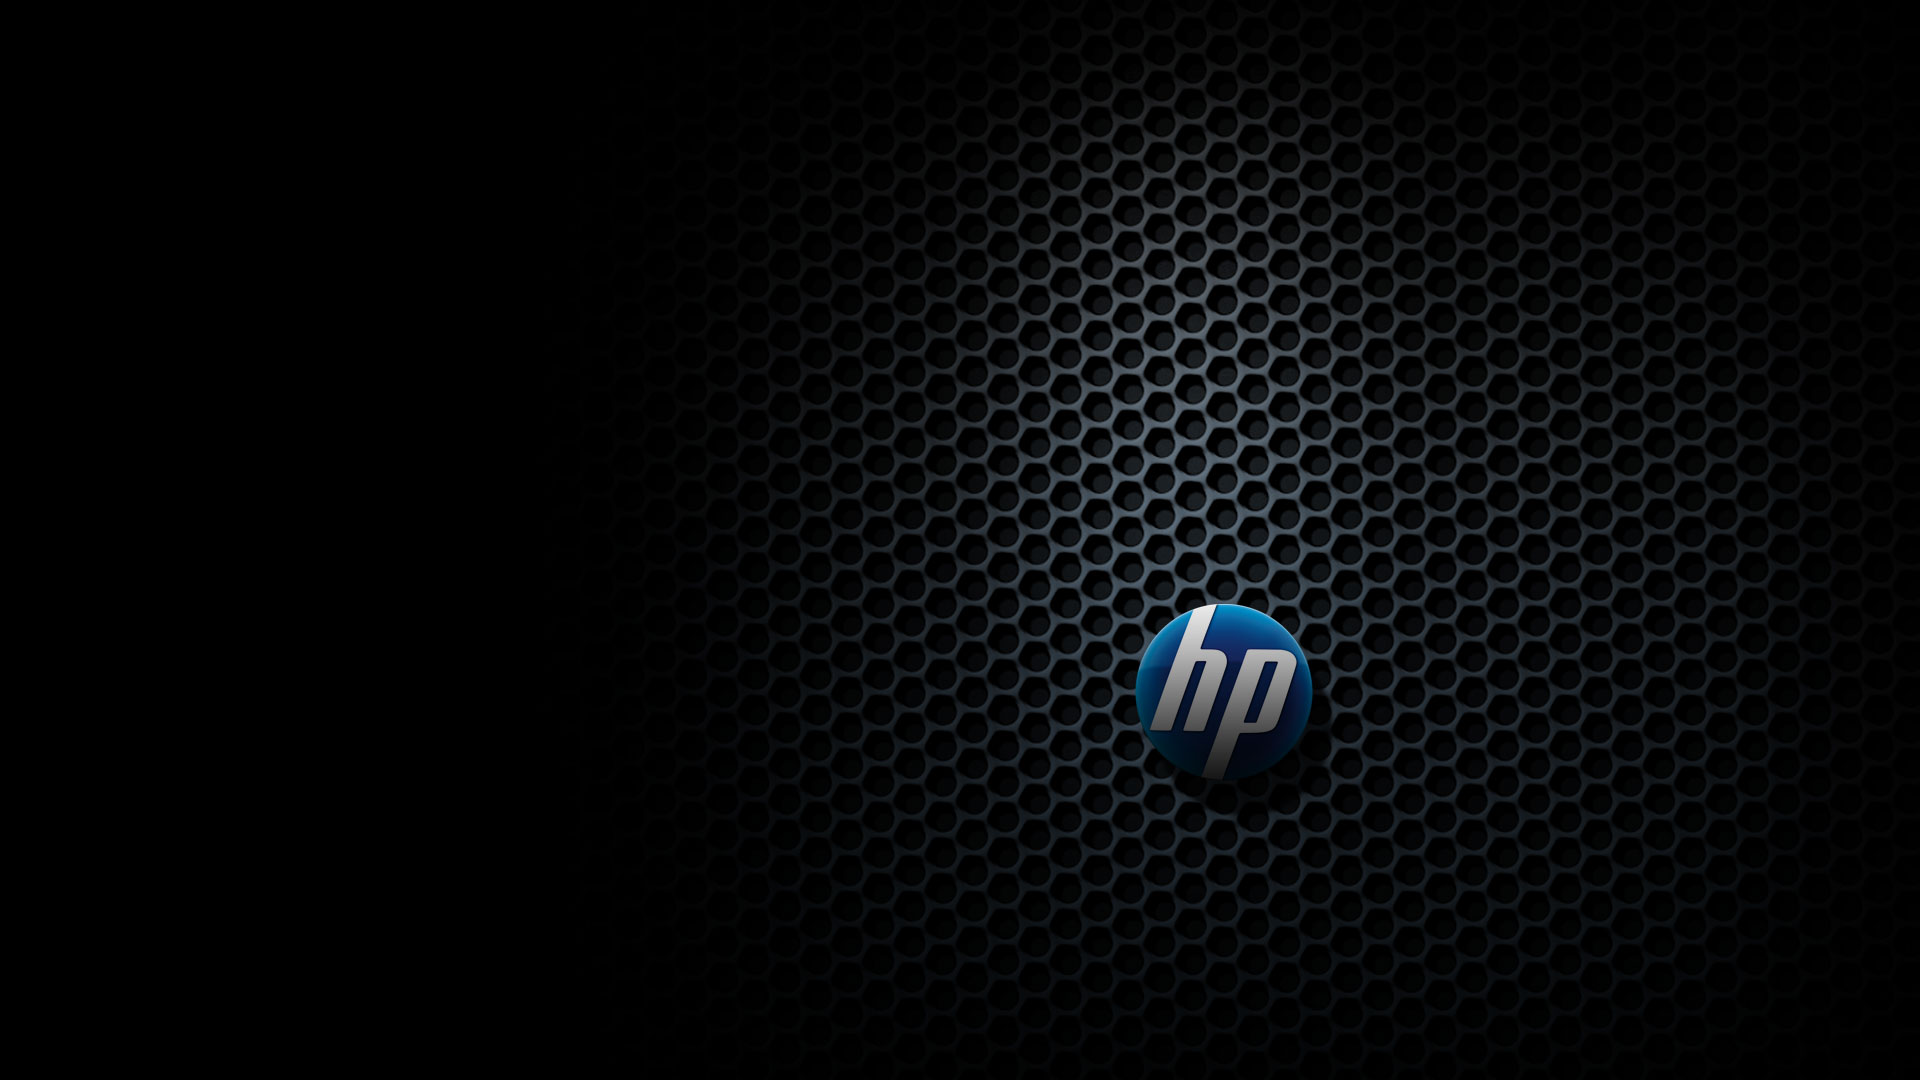 hp desktop wallpapers hd 1080p Desktop Backgrounds for HD 1920x1080